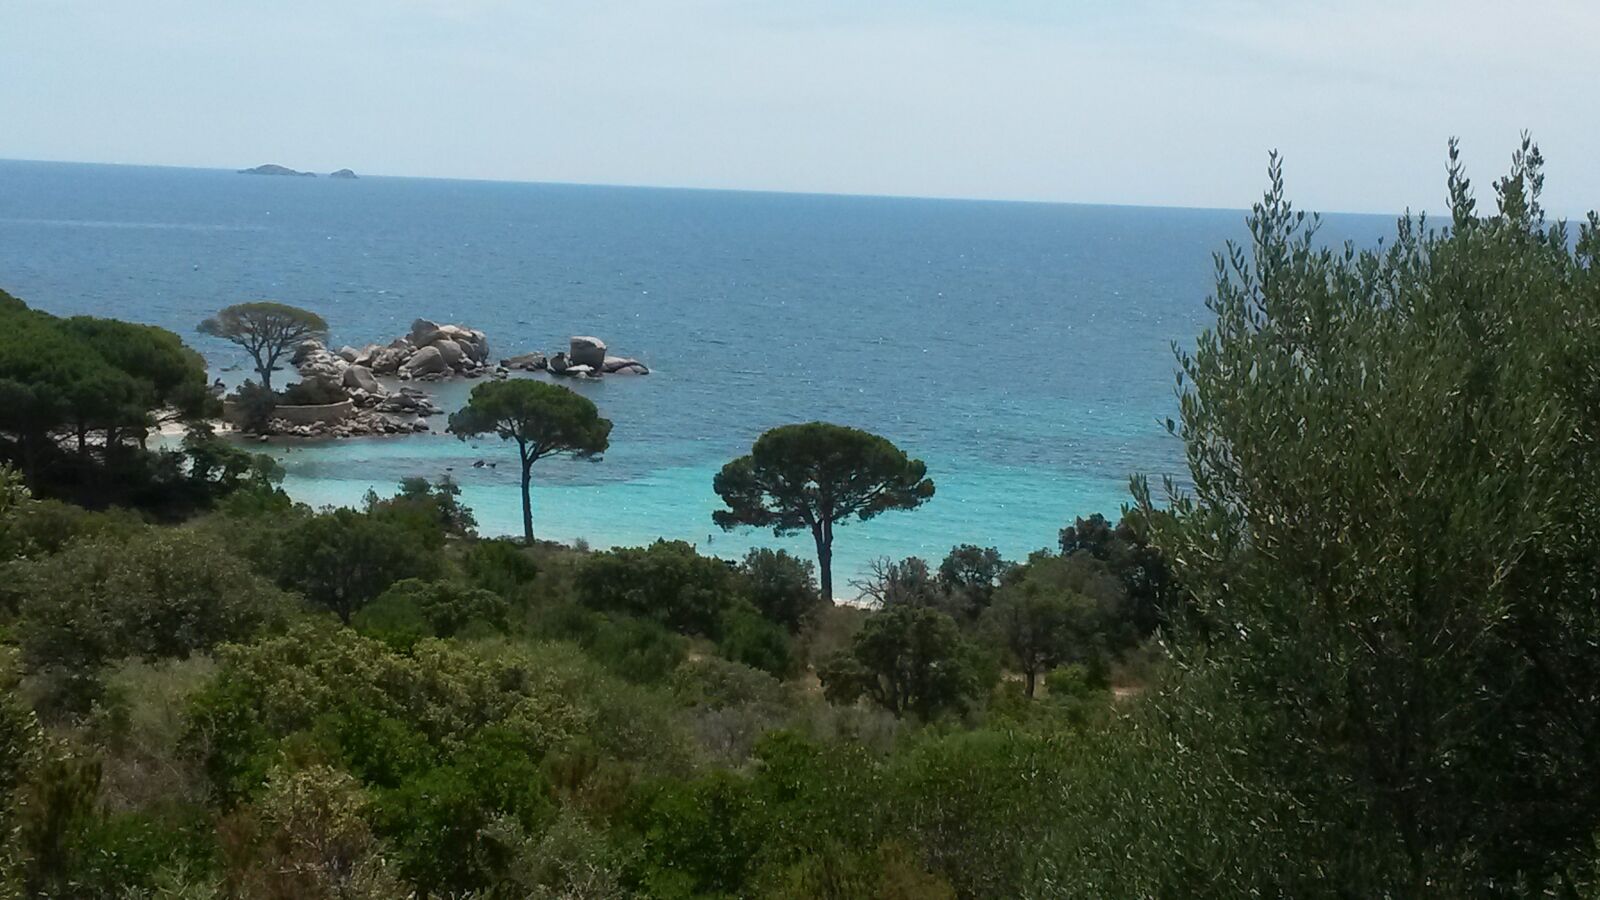 Samsung Galaxy S4 Mini sample photo. "Tree, beach, sea" photography